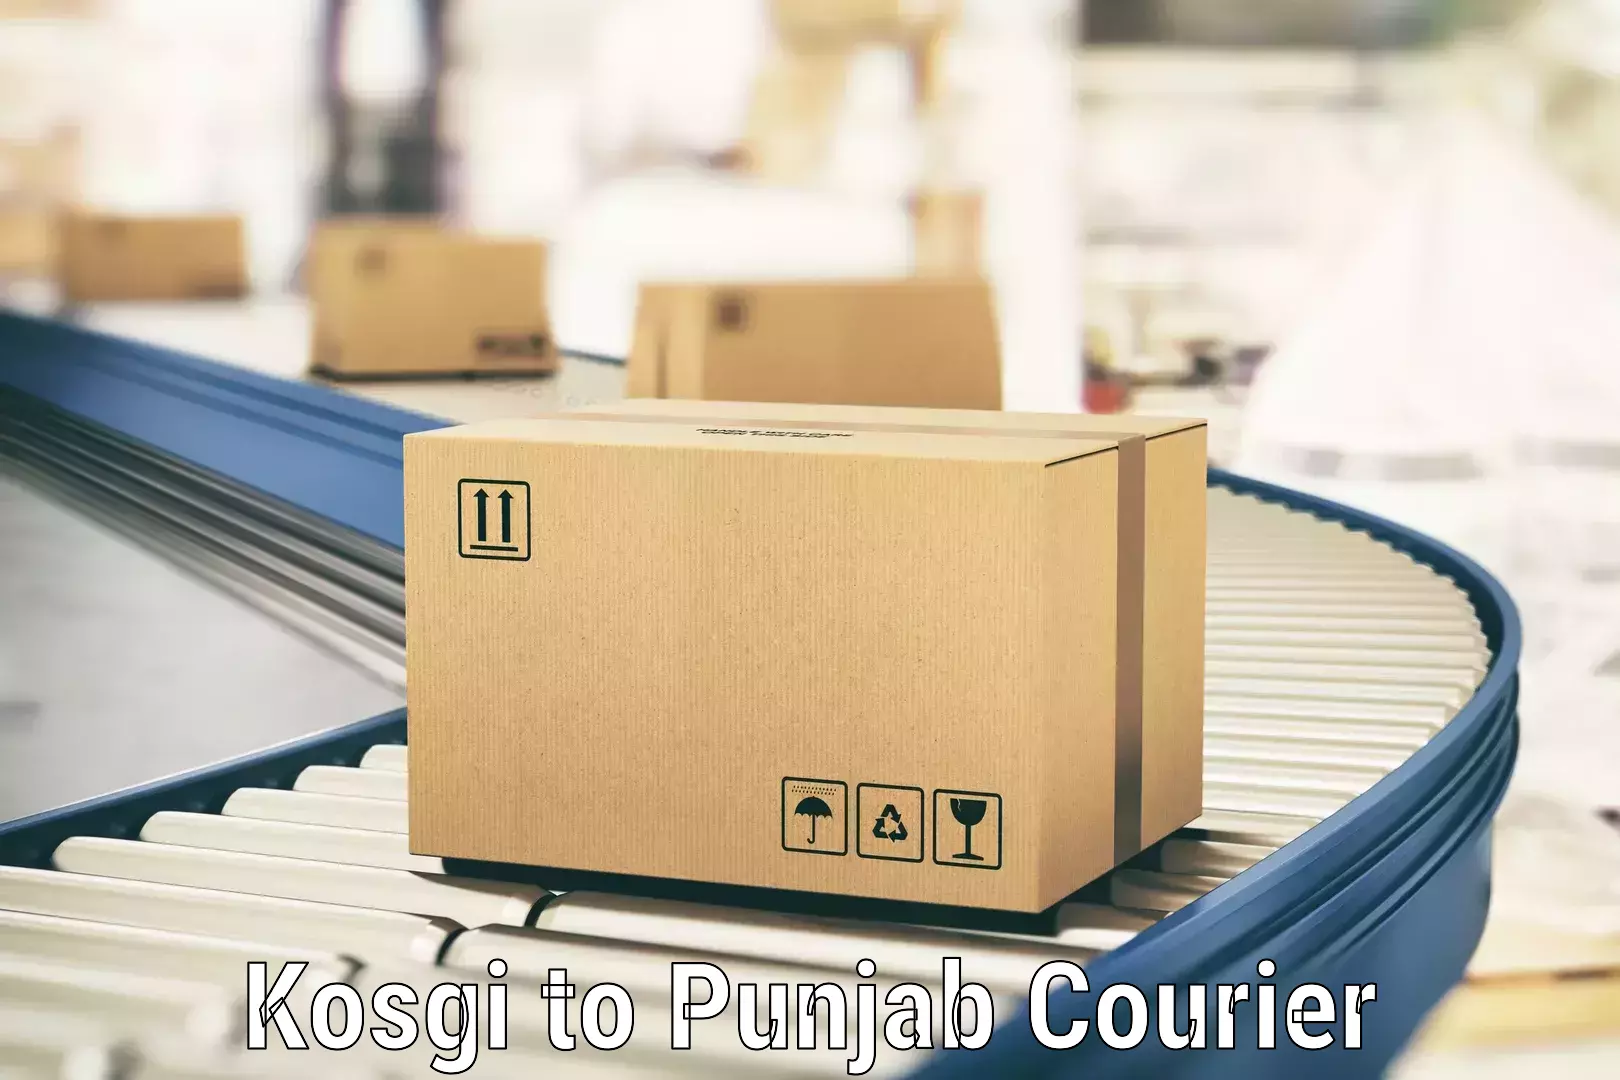 High-priority parcel service Kosgi to Patiala